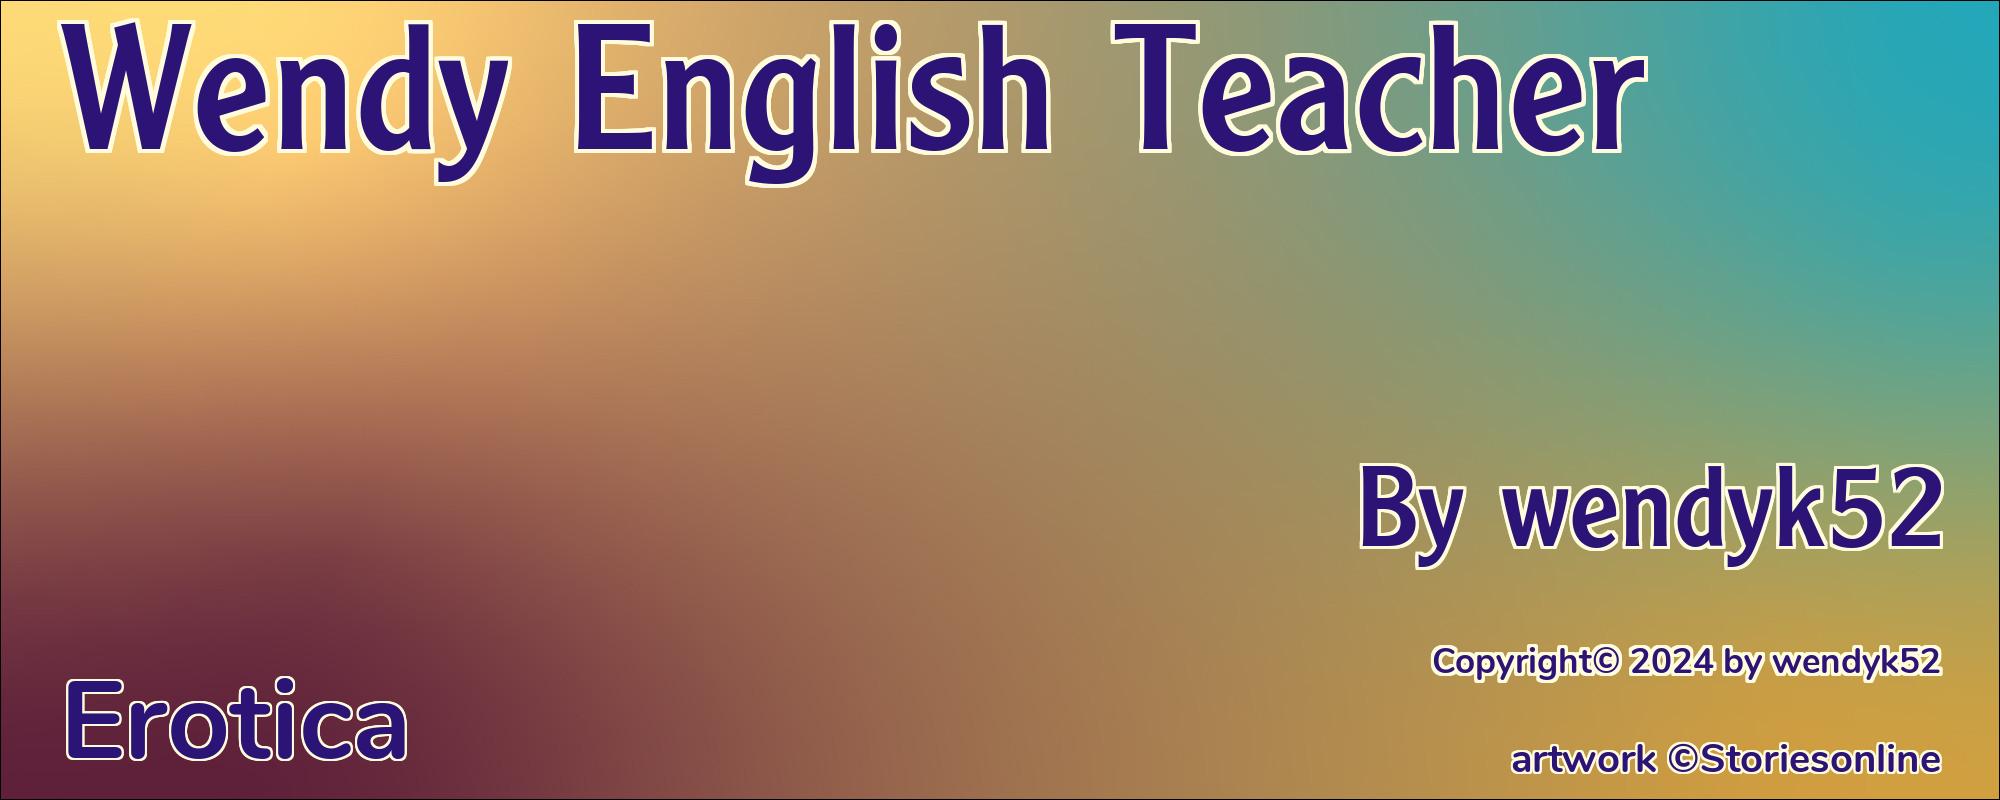 Wendy English Teacher - Cover